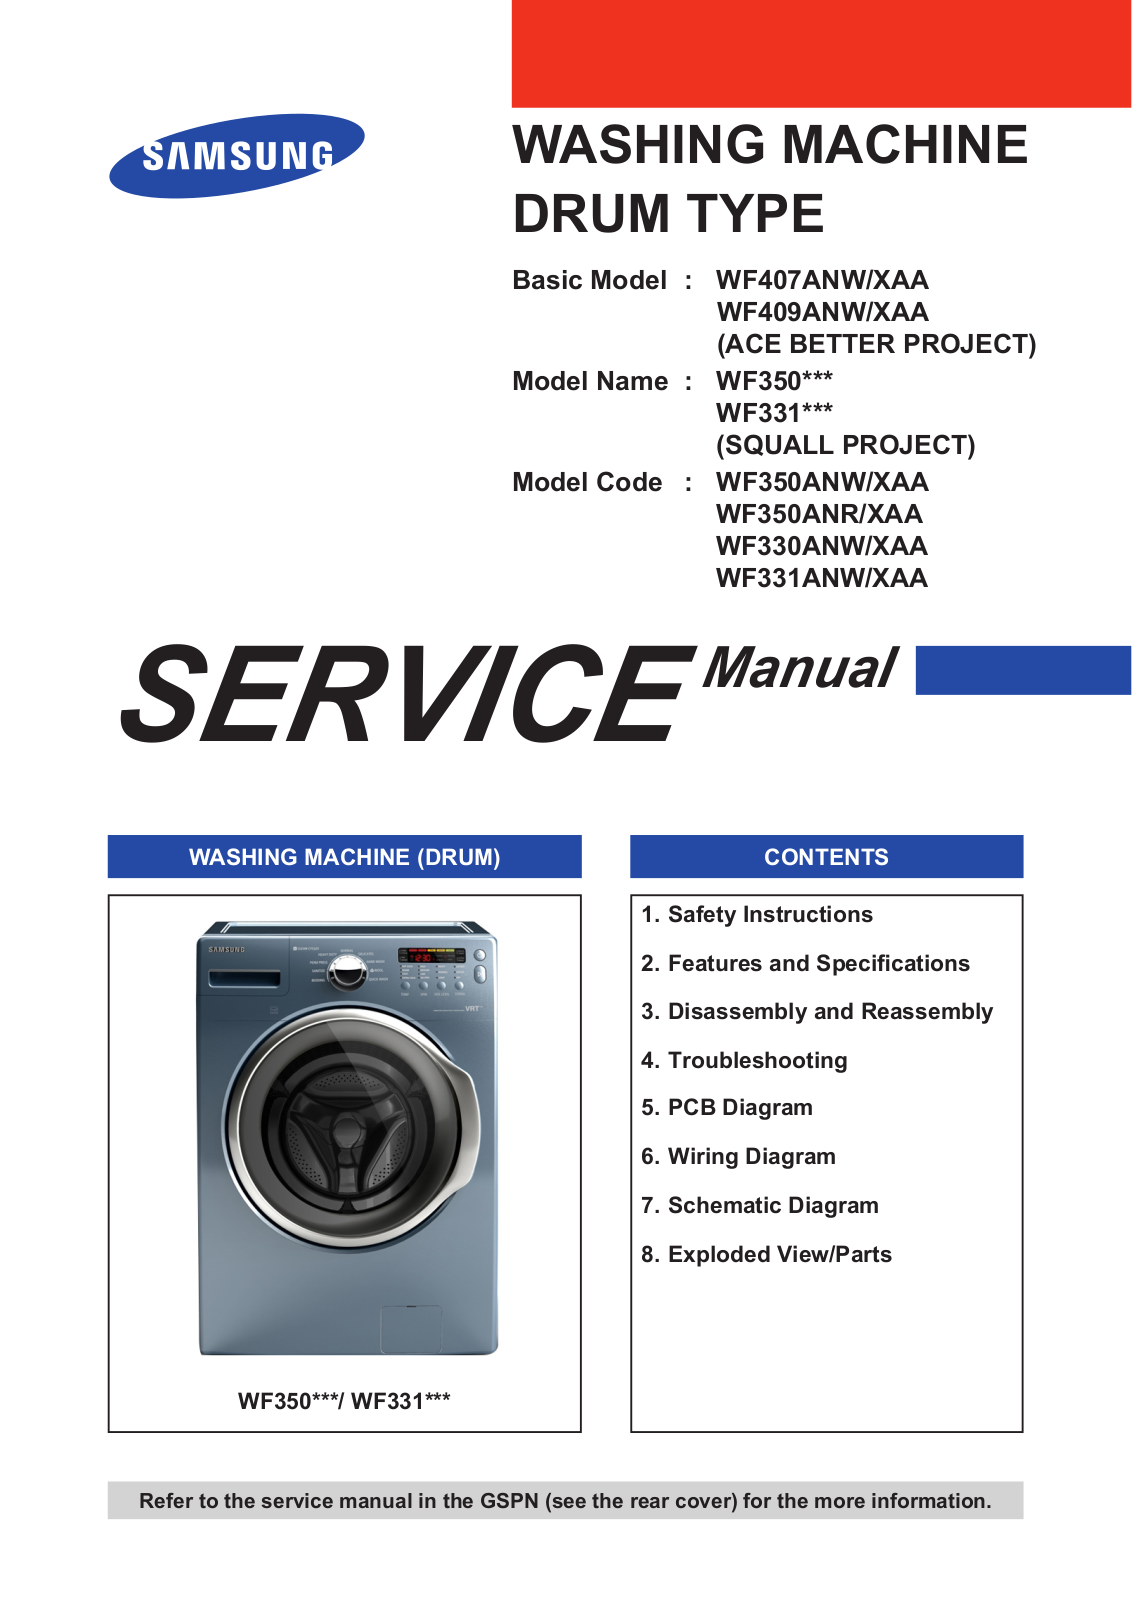 Samsung WF350ANW/XAA, WF350ANR/XAA, WF330ANW/XAA, WF331ANW/XAA Service Manual